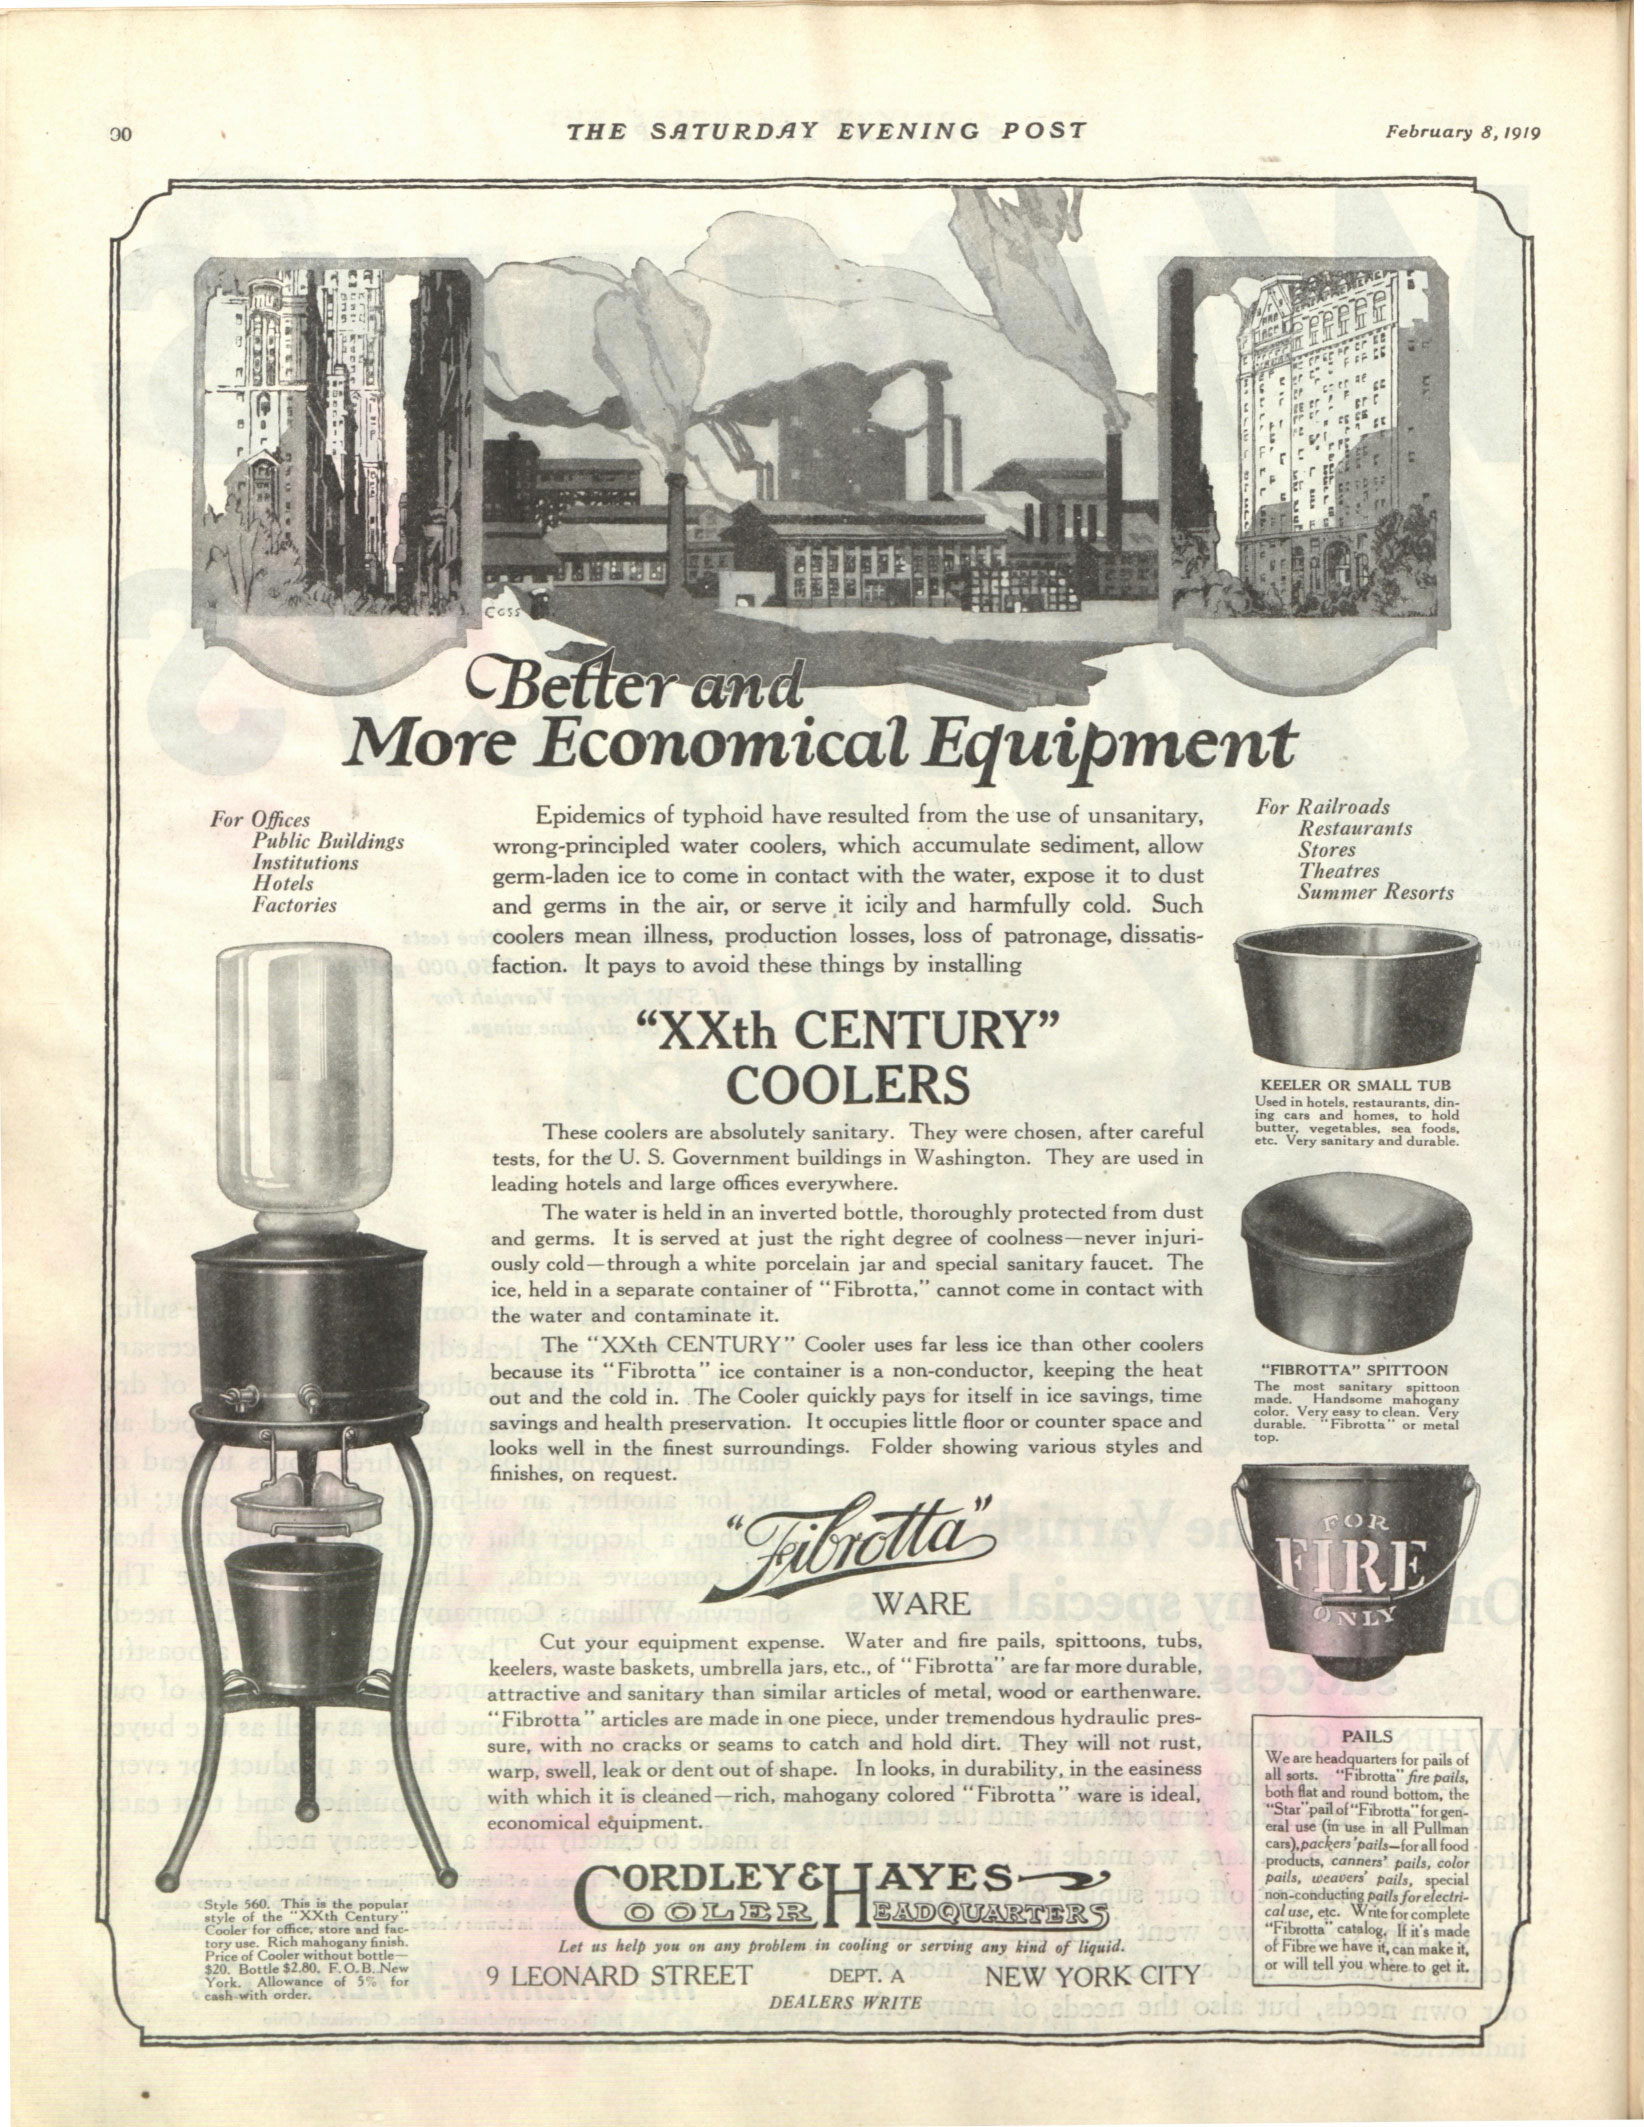 Vintage advertisement